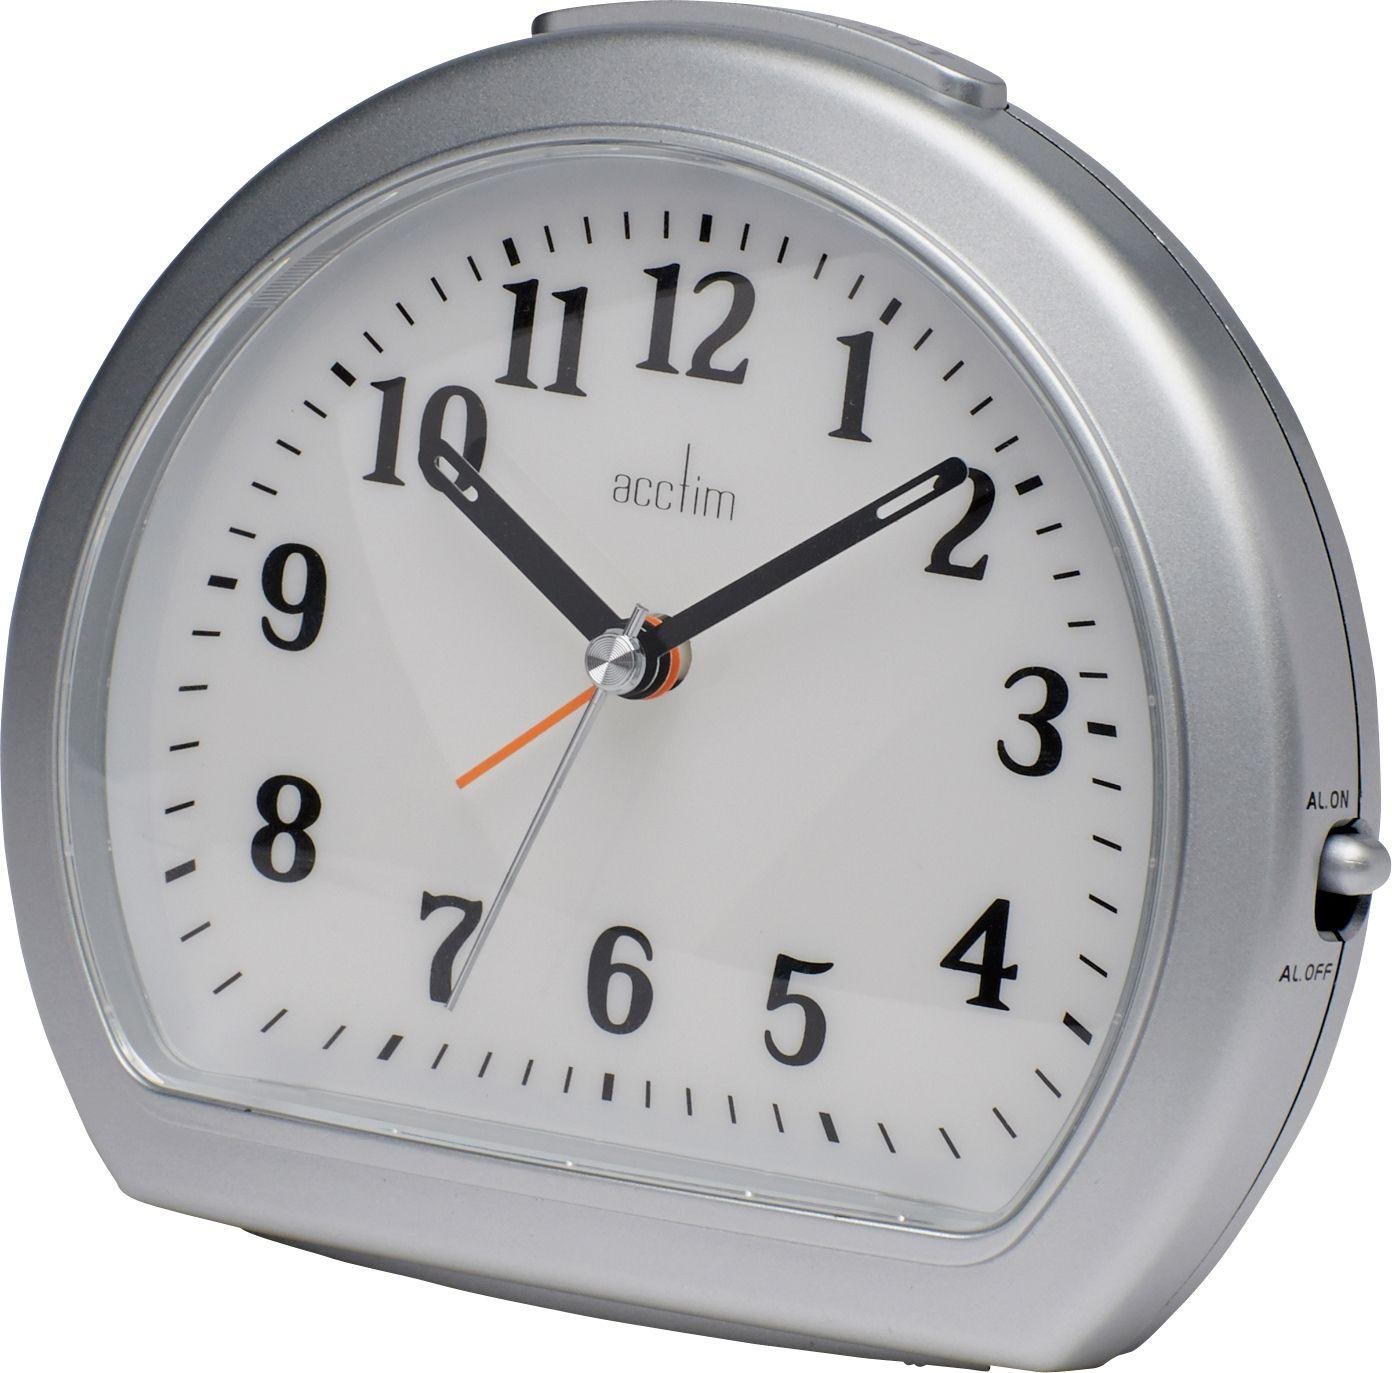 Acctim Smartlite Sweeper Alarm Clock Review